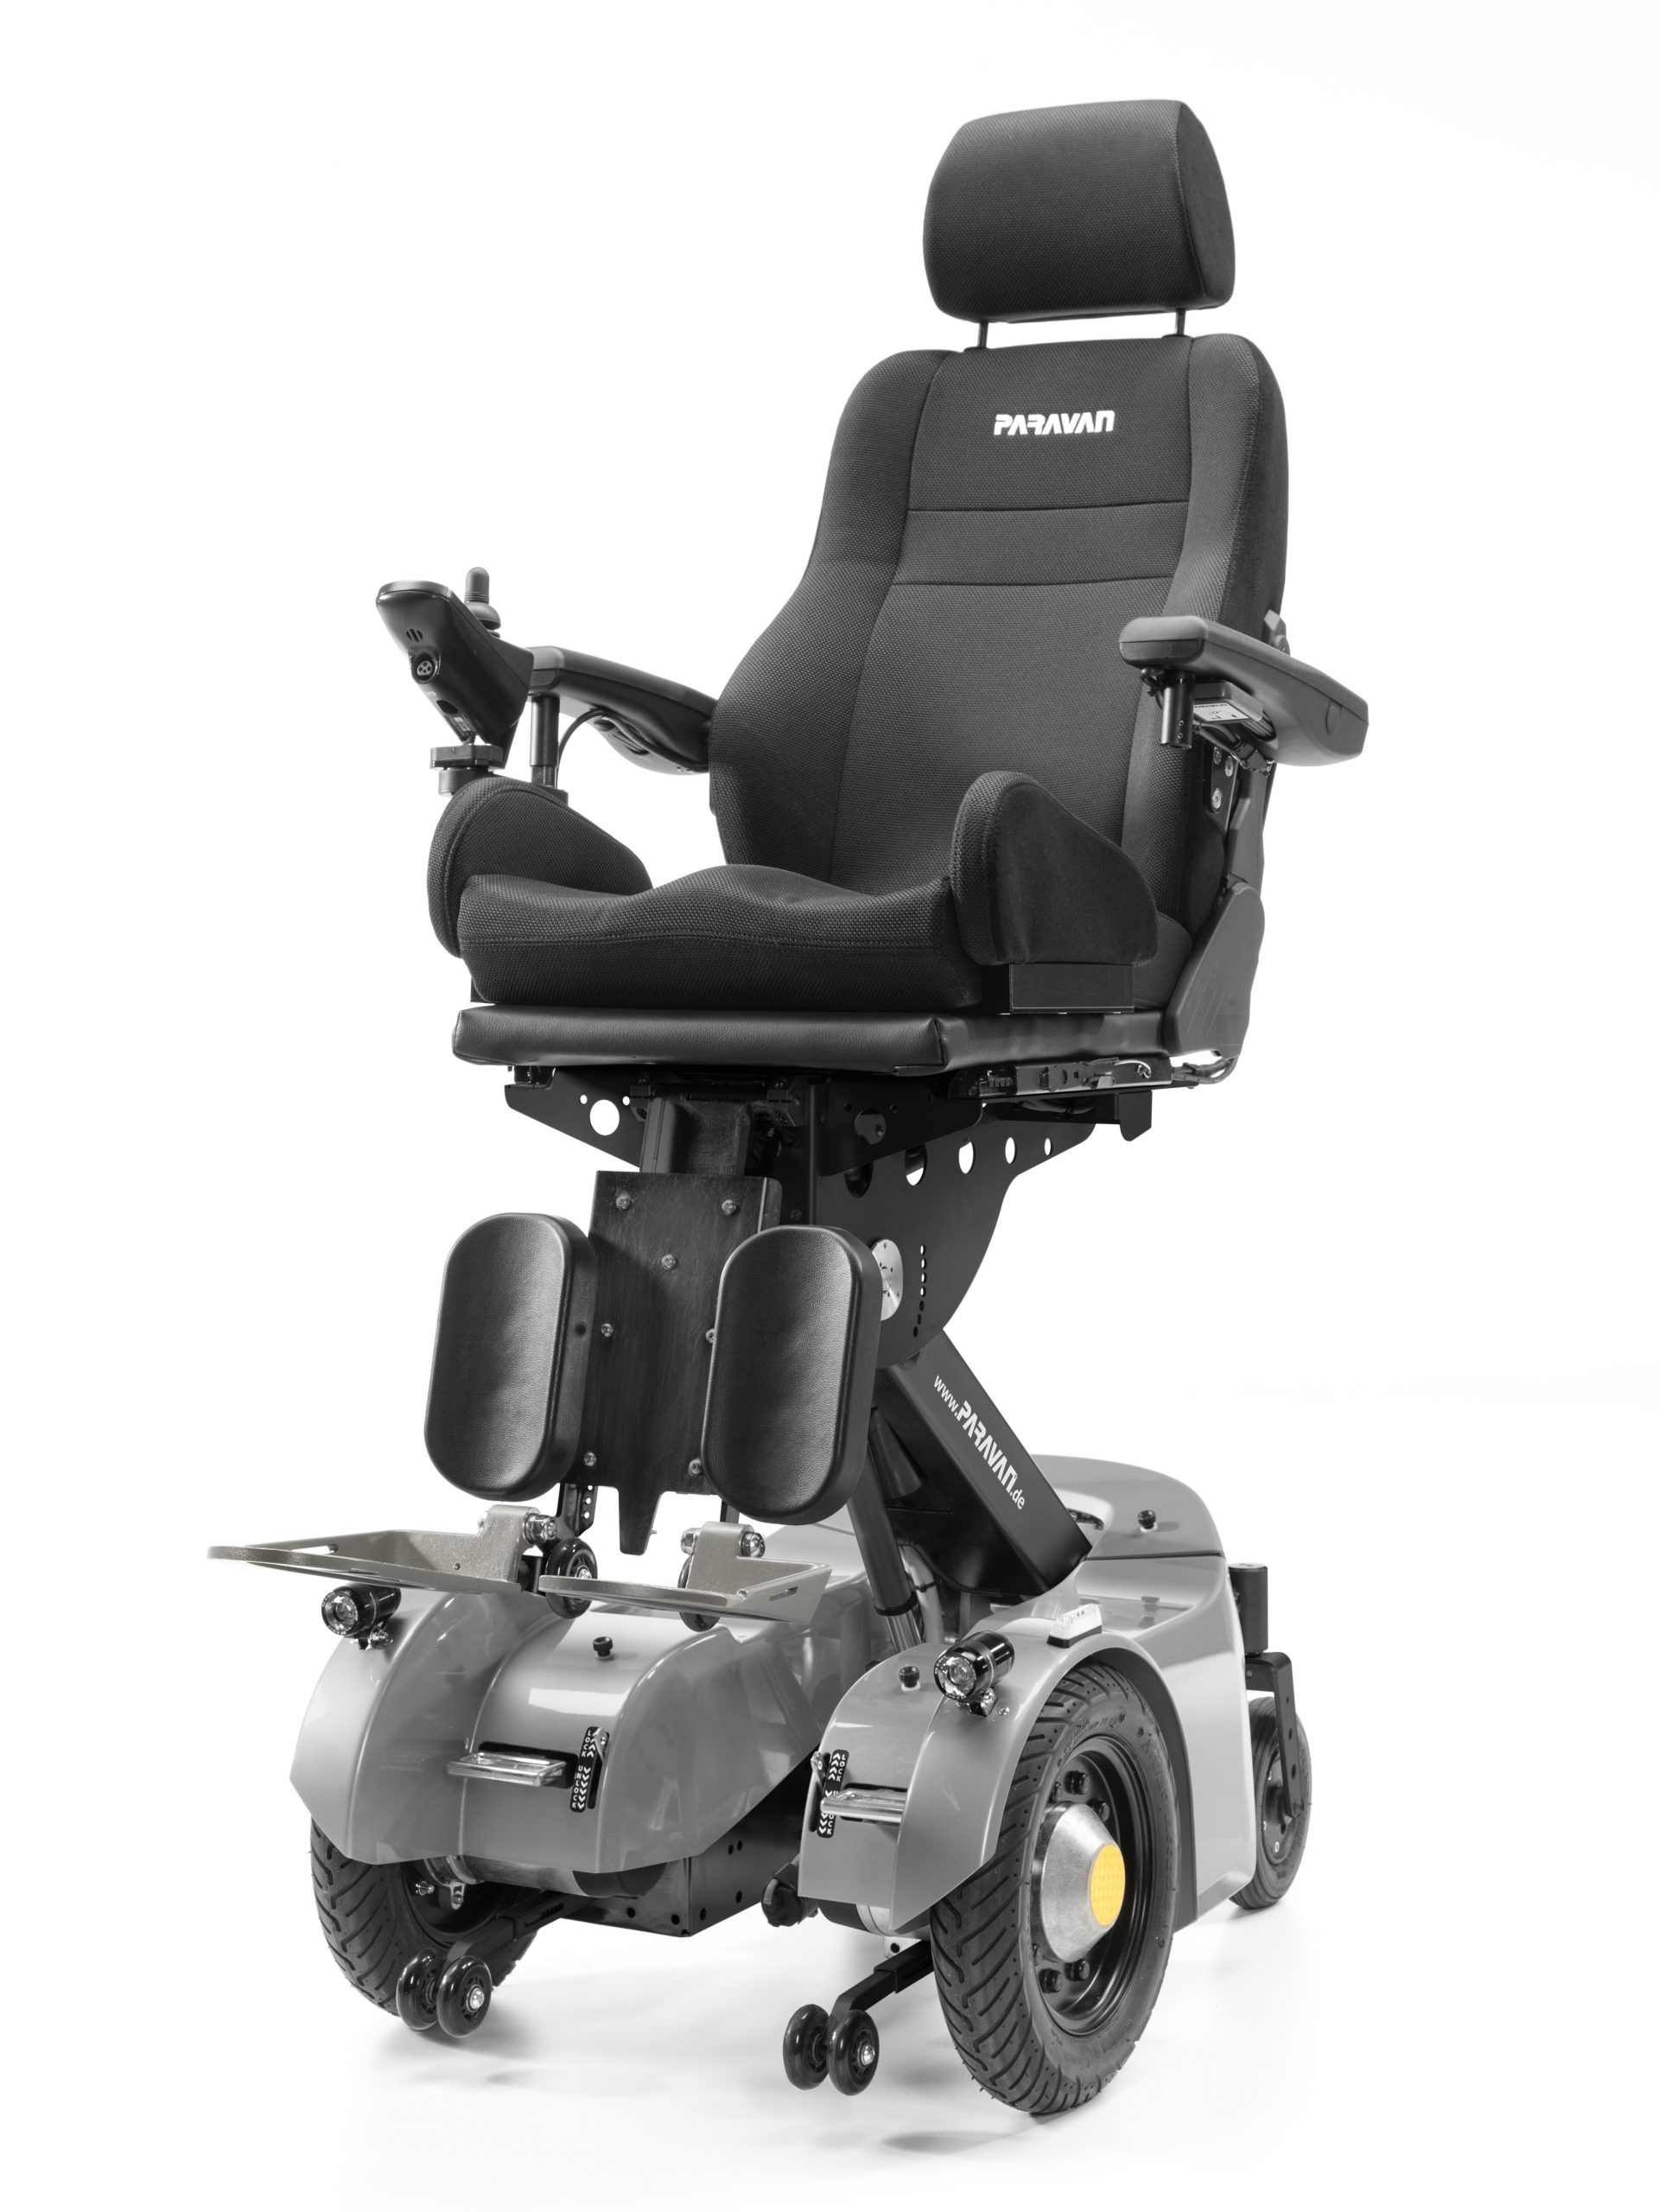 Paravan PR30 – Powered Wheelchair